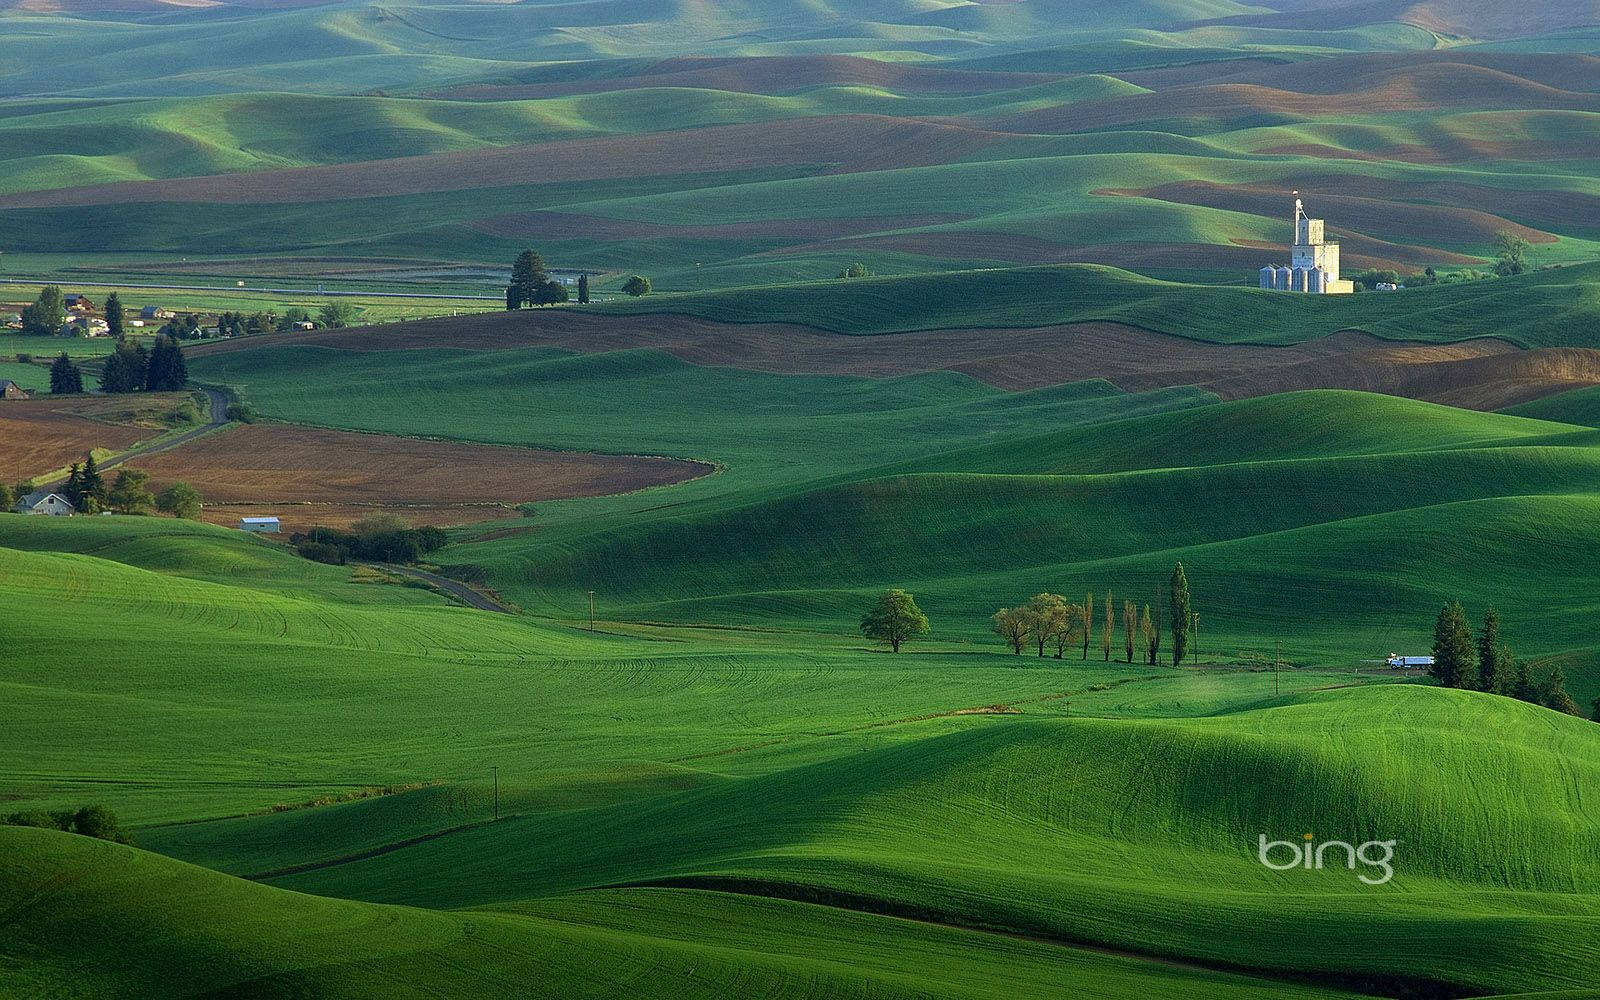 Bing Green Landscape Background